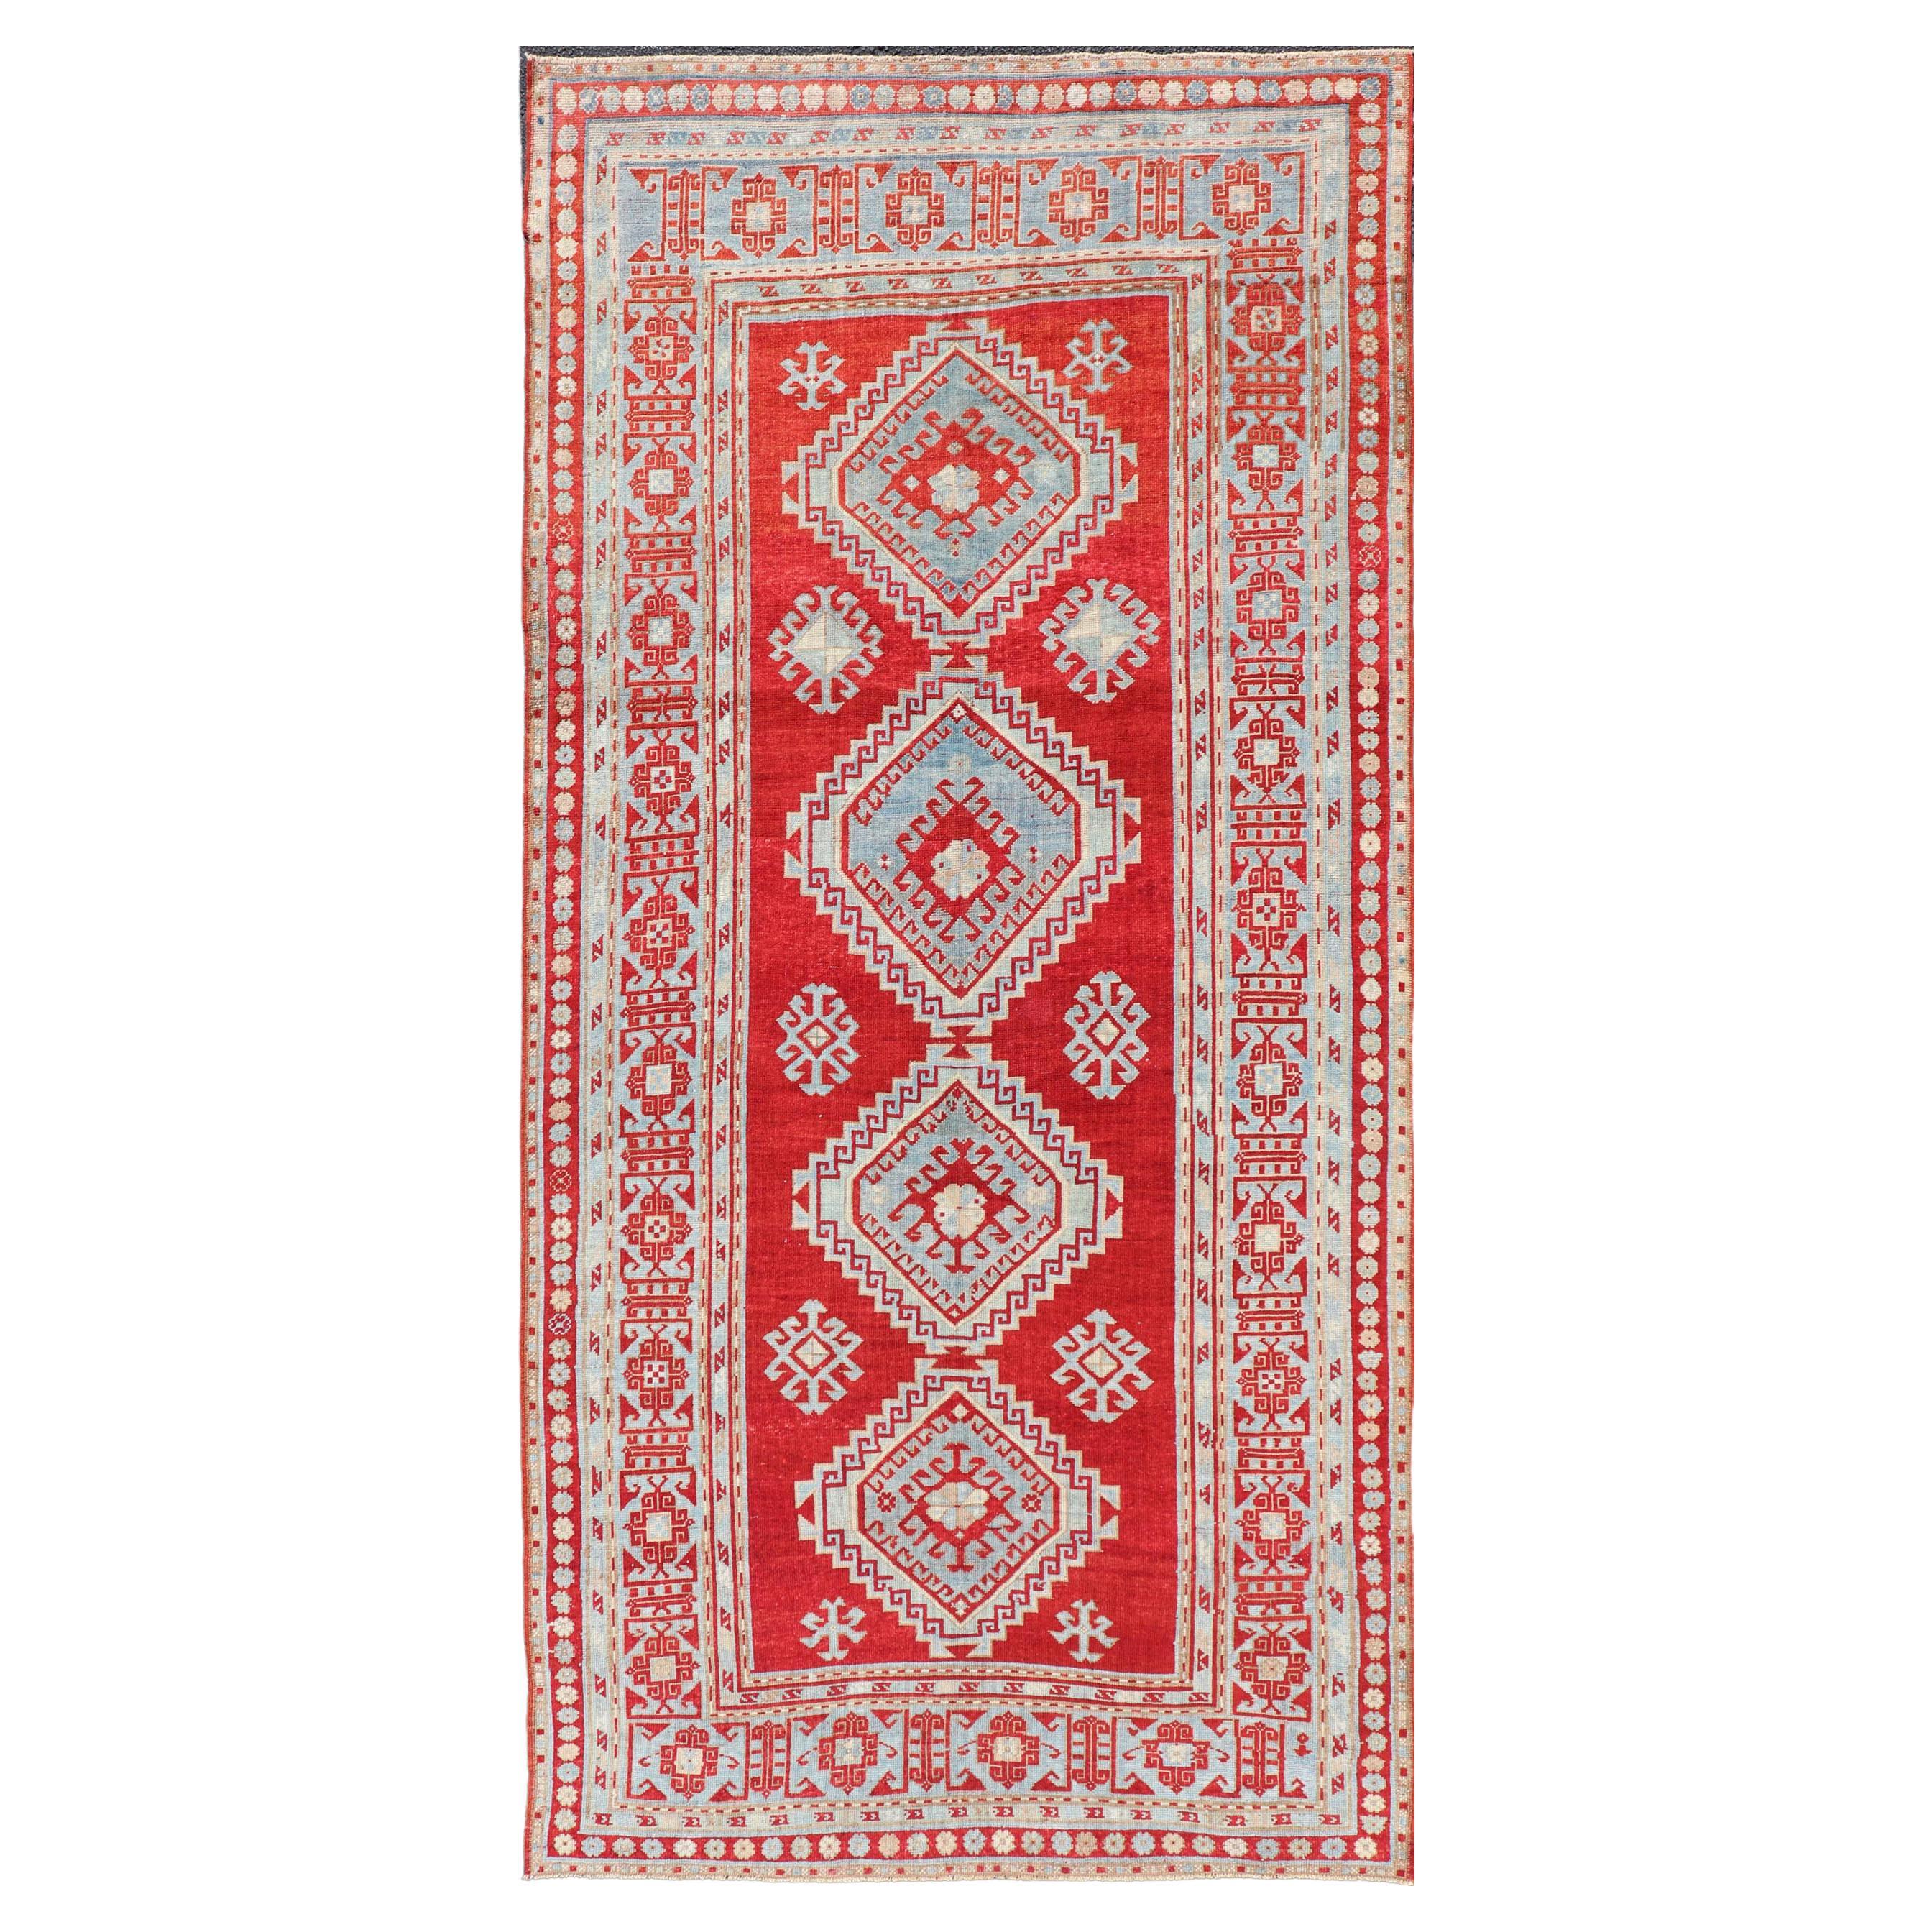 Antique Caucasian Kazak Gallery Rug in Brilliant Red with Geometric Design For Sale